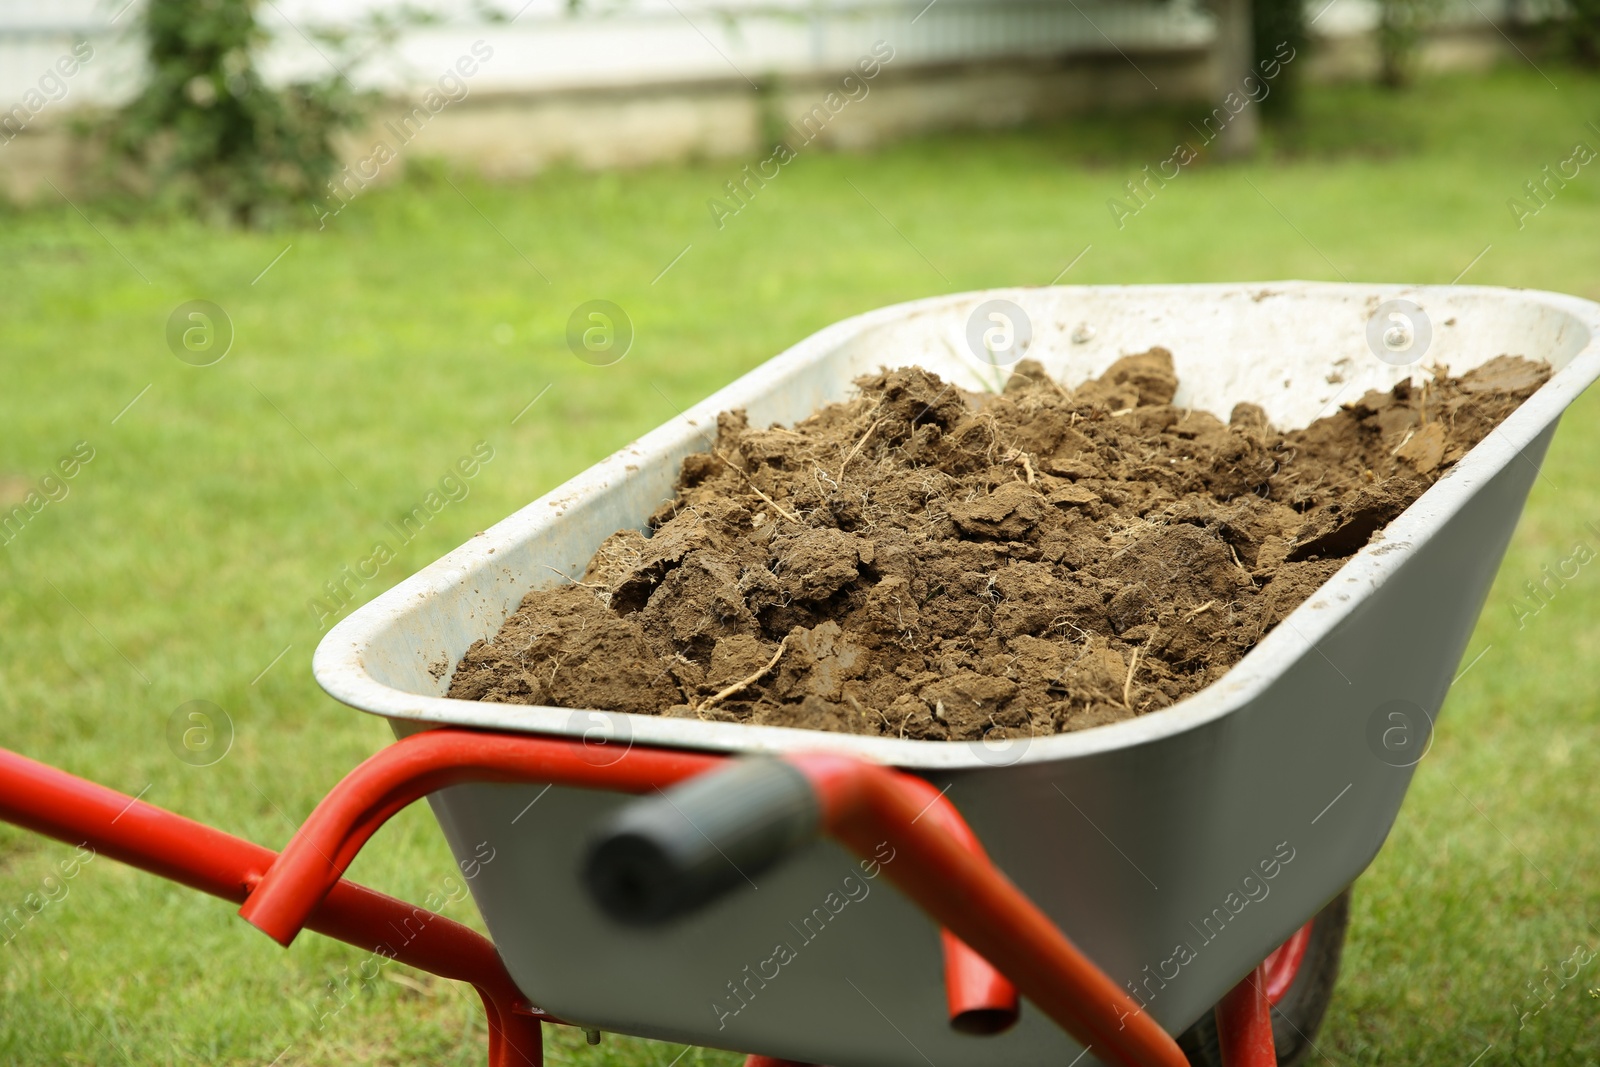 Photo of Wheelbarrow with soil on green grass outdoors, closeup